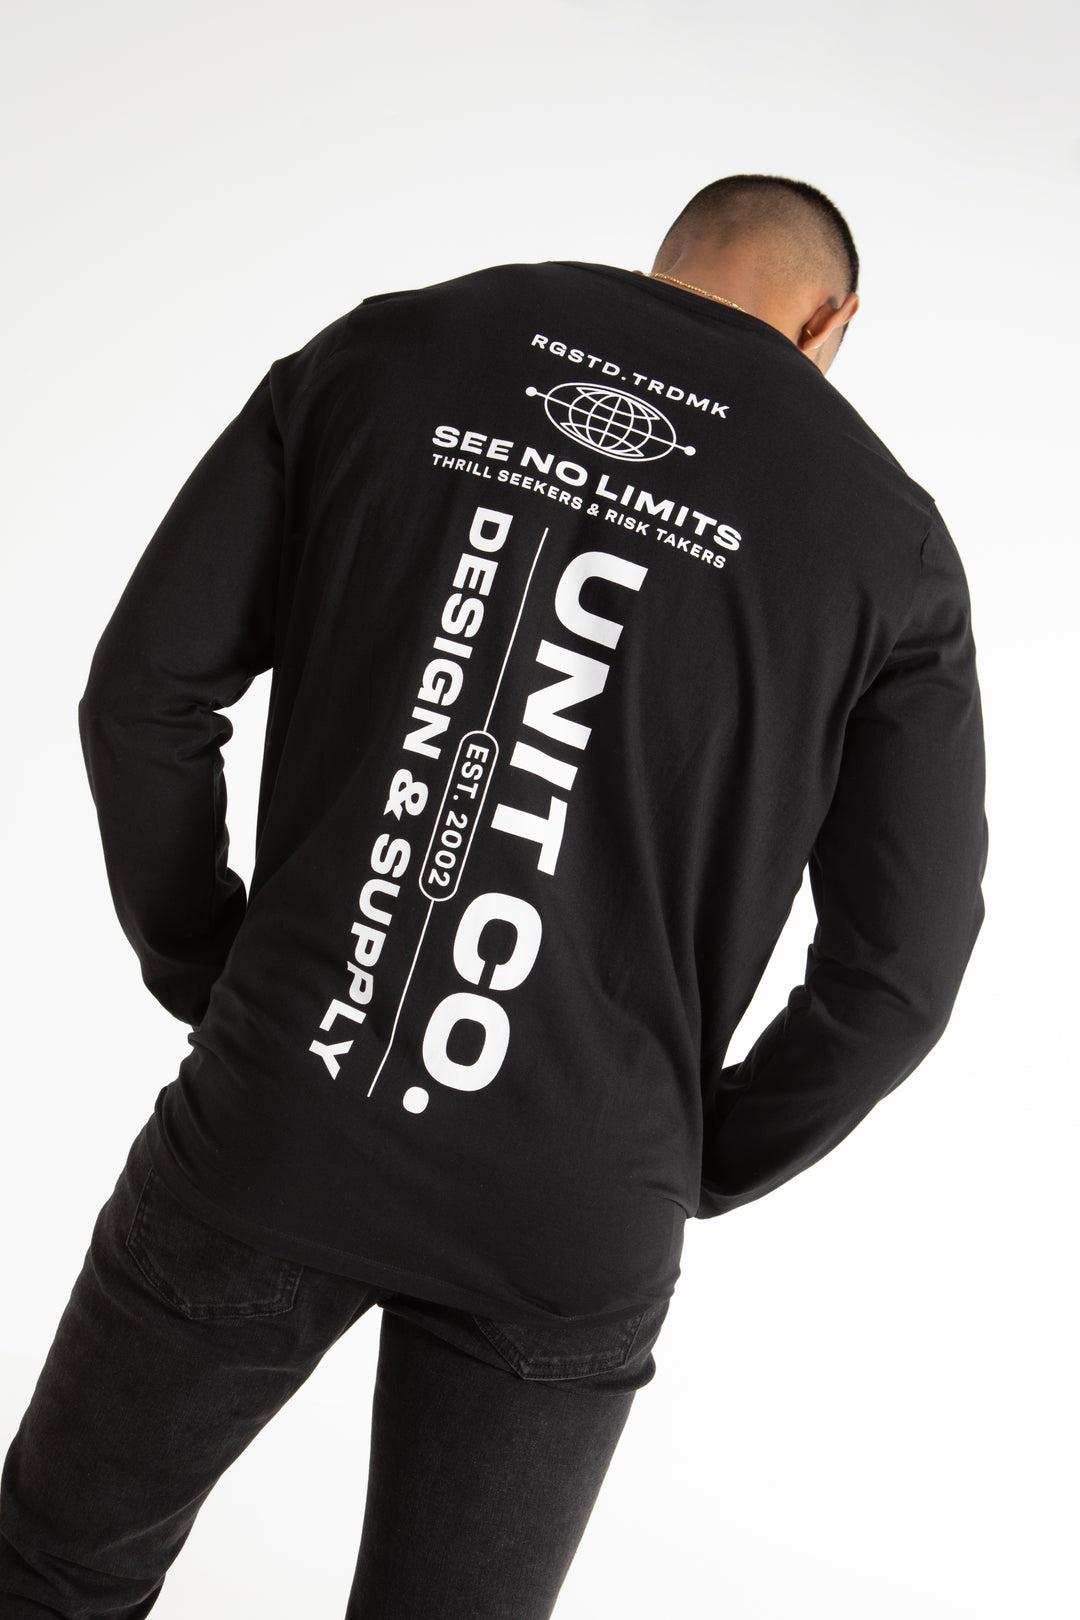 UNIT Mens Worldwide L/Slv T-Shirt